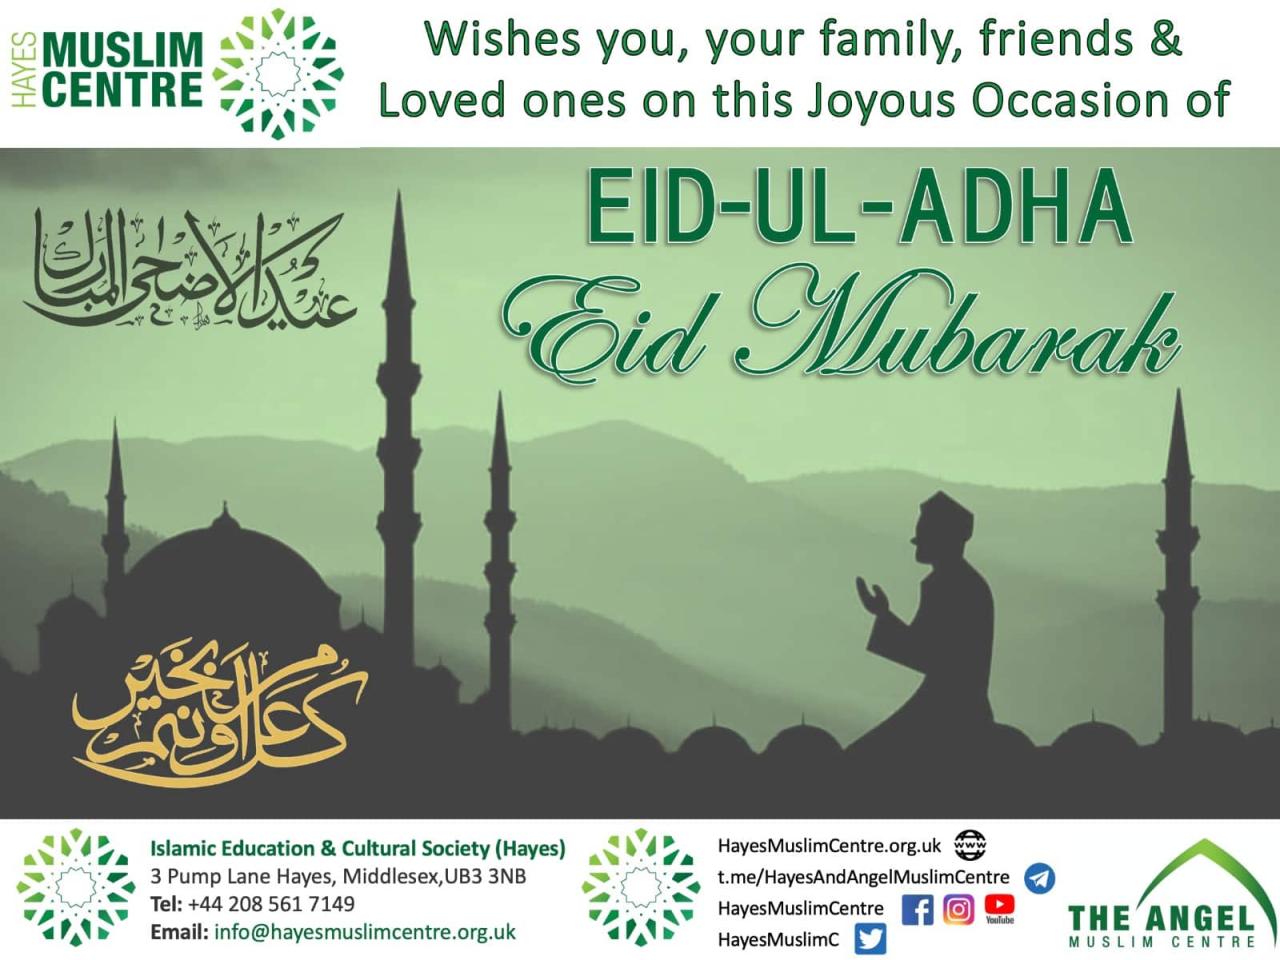 Adha ul wishes mubarak holidays yogreetings